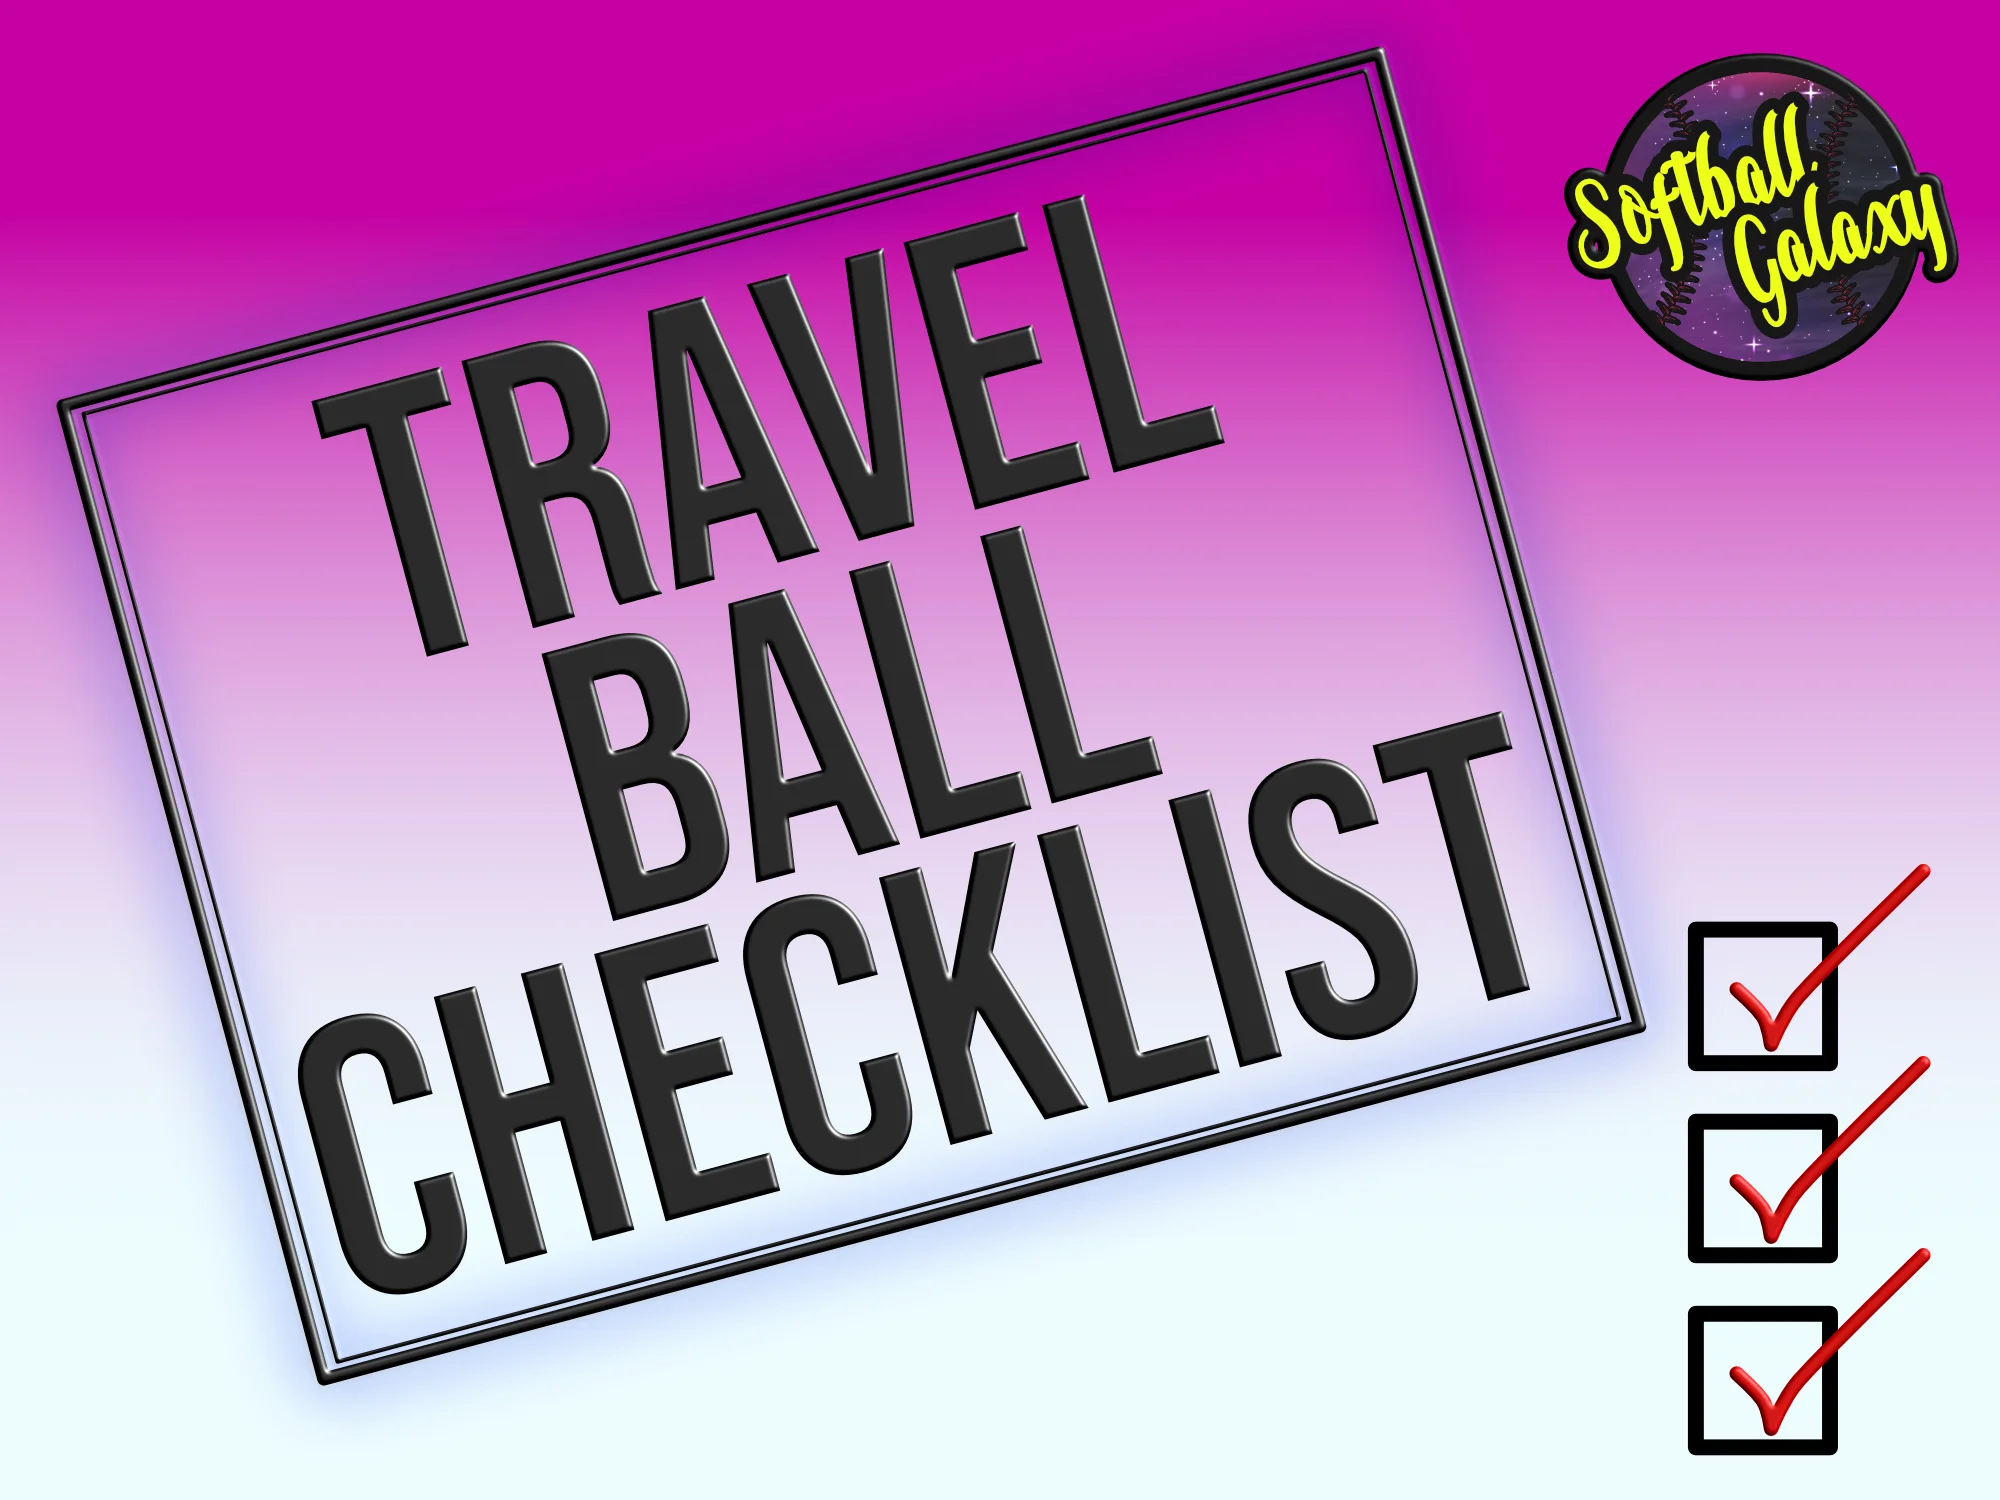 Travel Ball Checklist for Softball